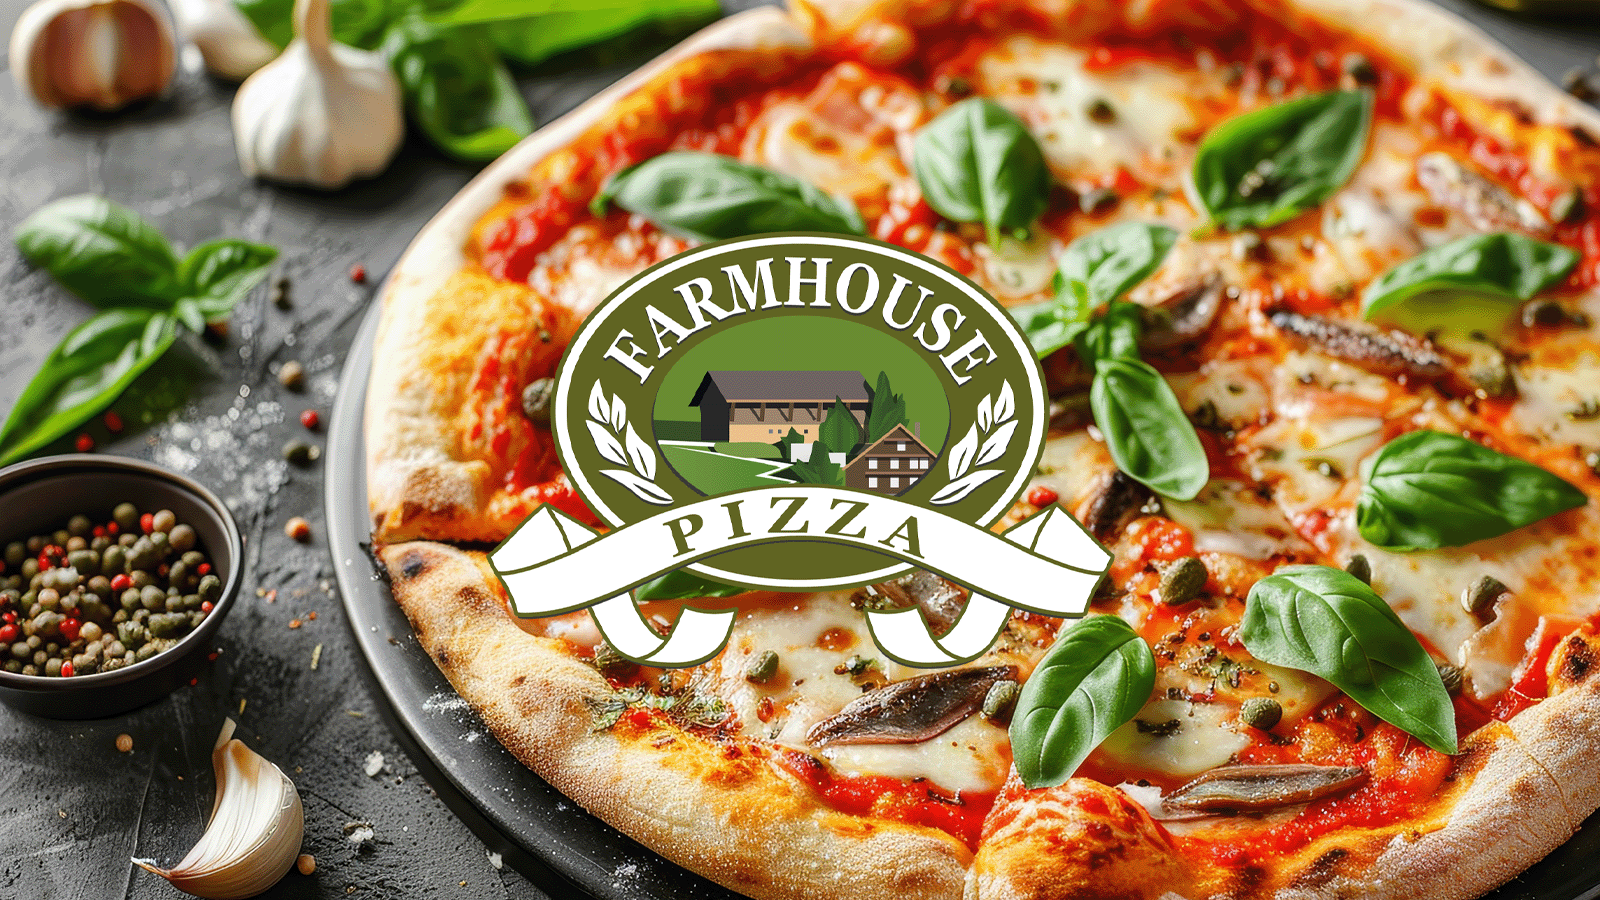 Farmhouse Pizza London